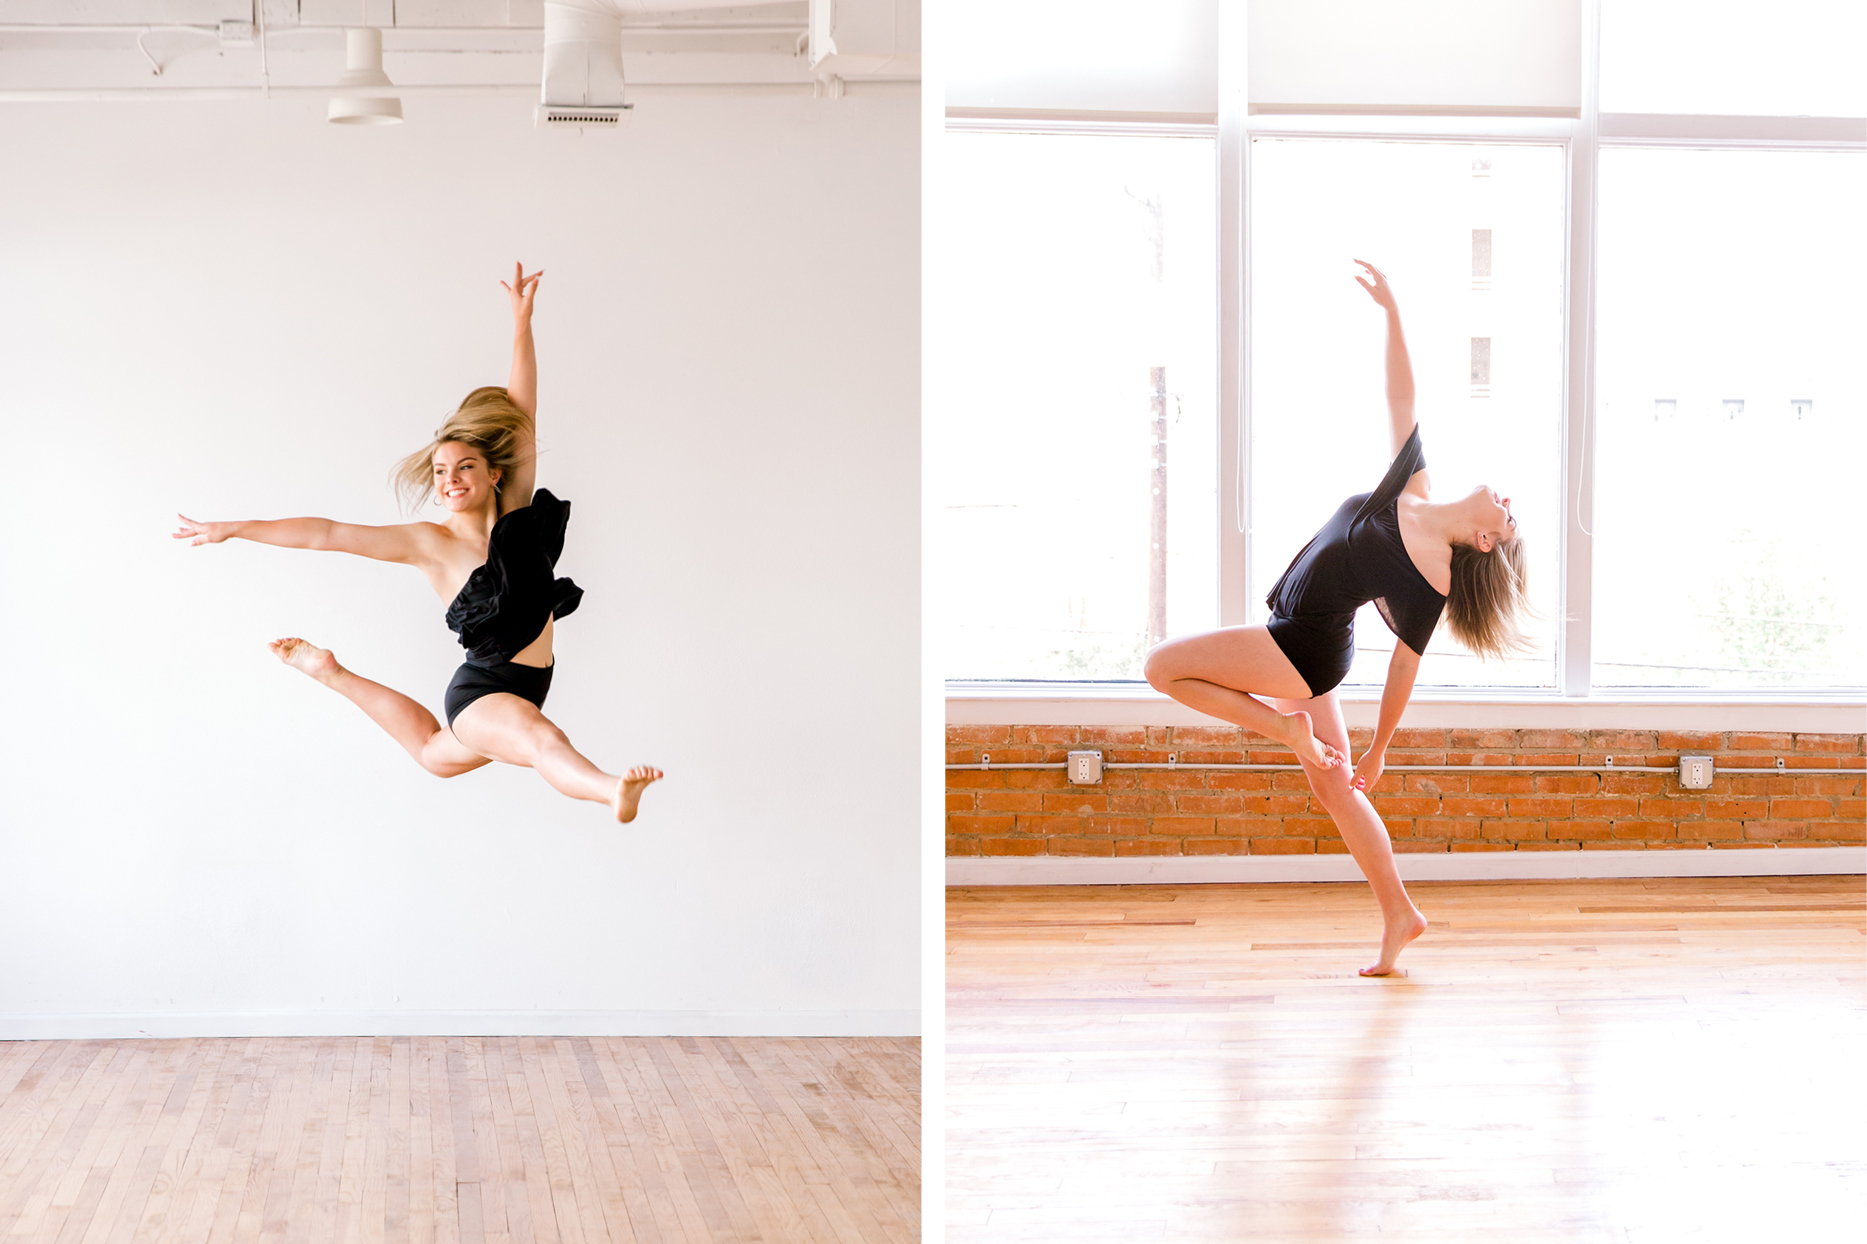 Senior Dance Photographer Dallas - Laylee Emadi Photography - DanceFX Studio Session